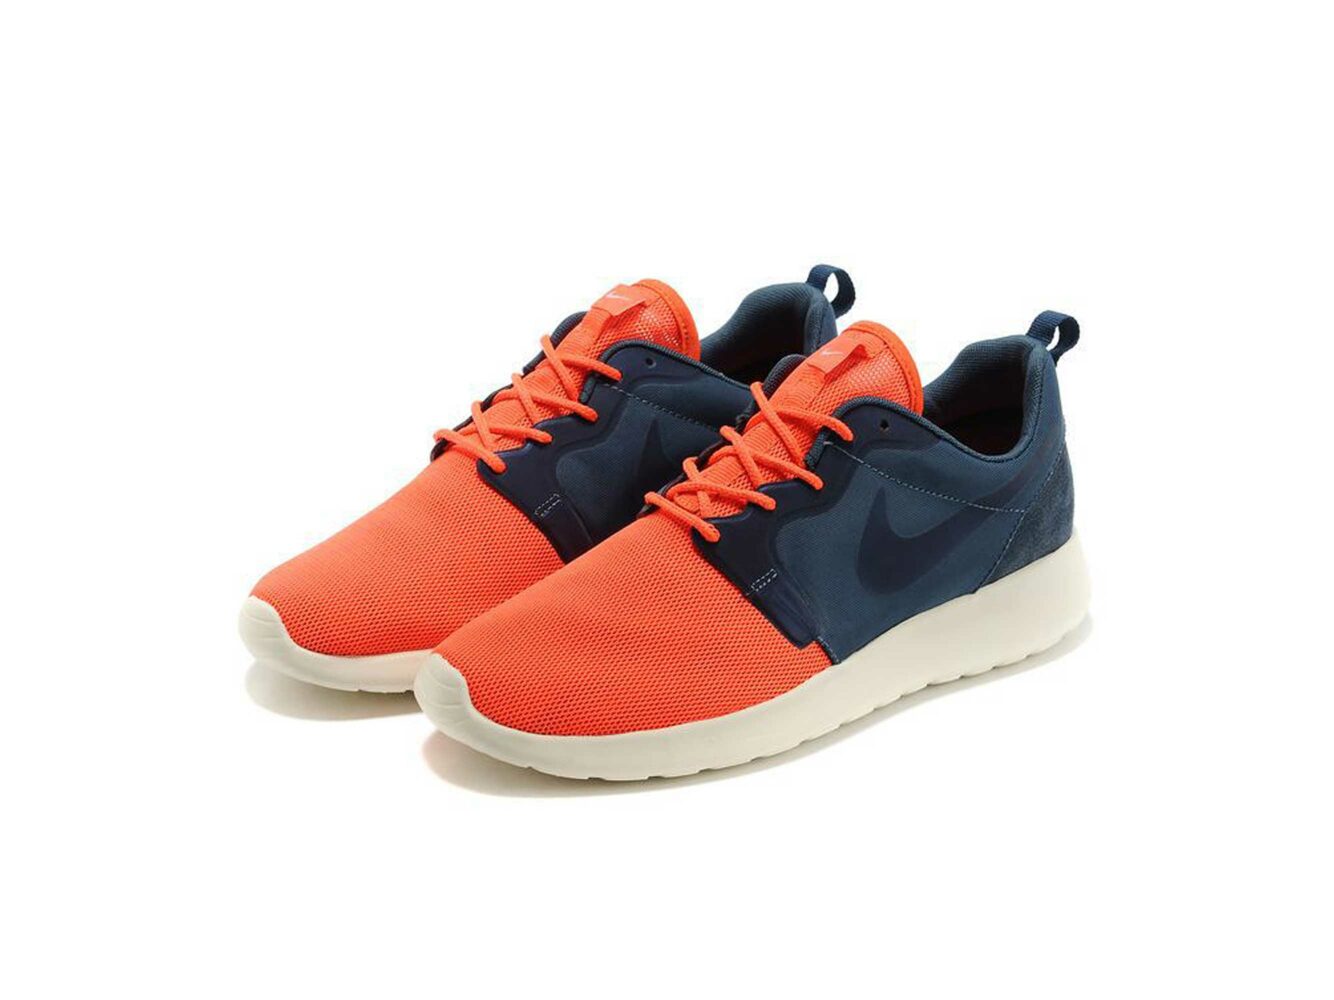 Nike Roshe Run Qs Total-Crimson Squadron-Blue